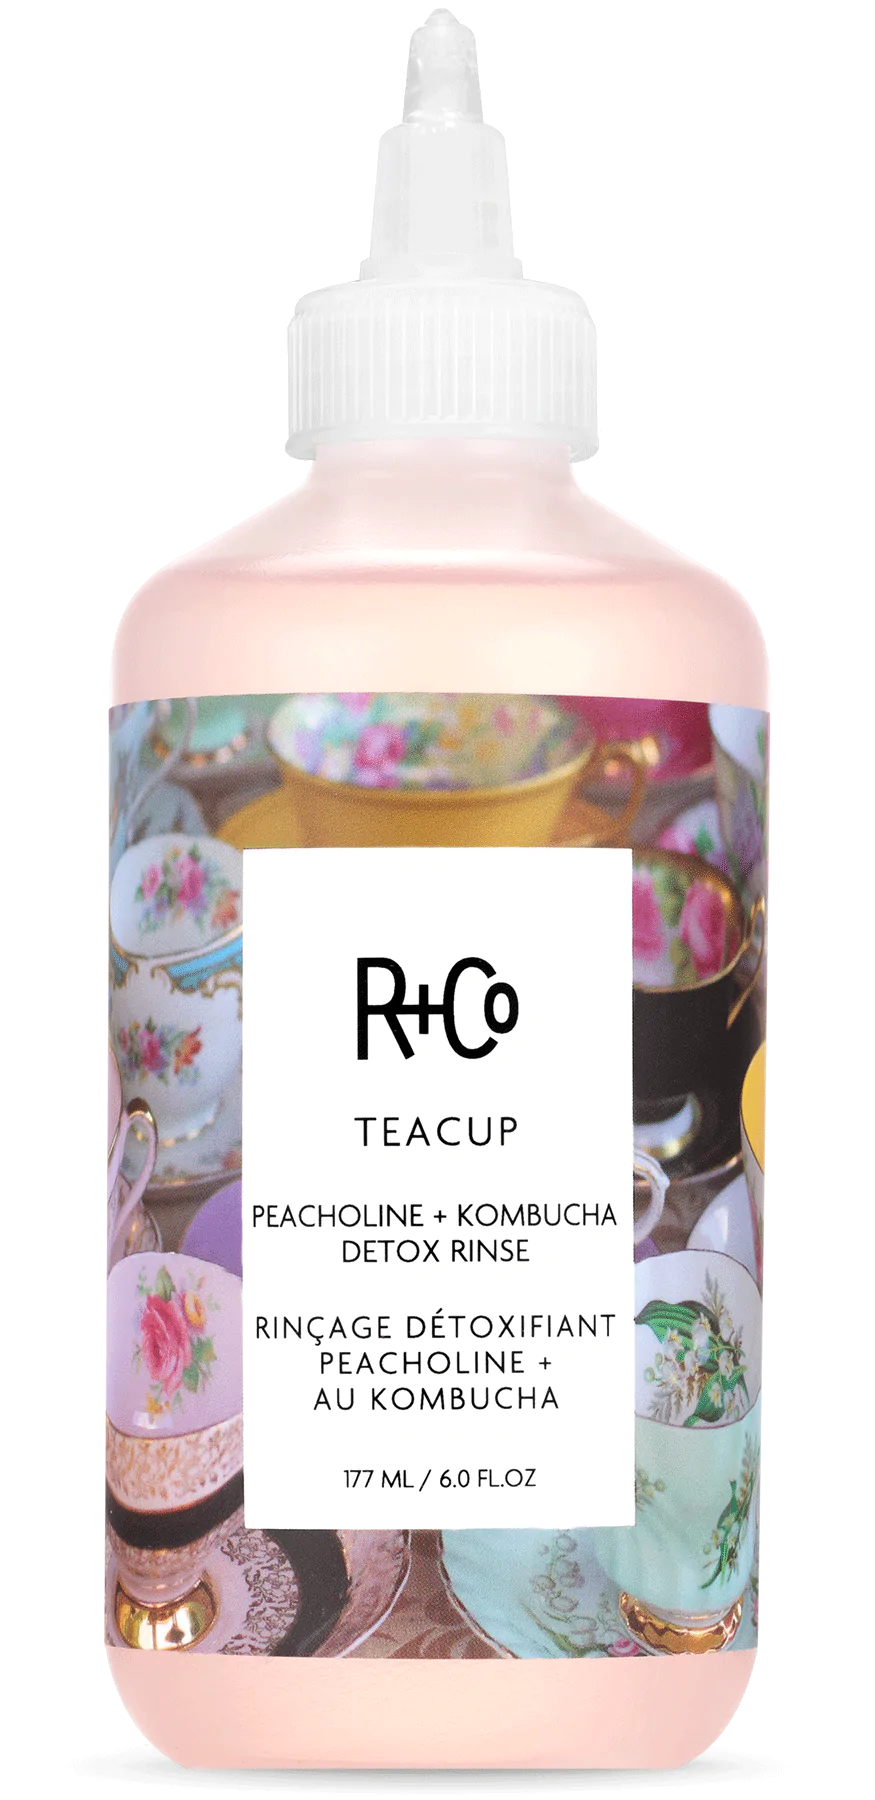 Teacup: Peacholine + Kombucha Detox Rinse